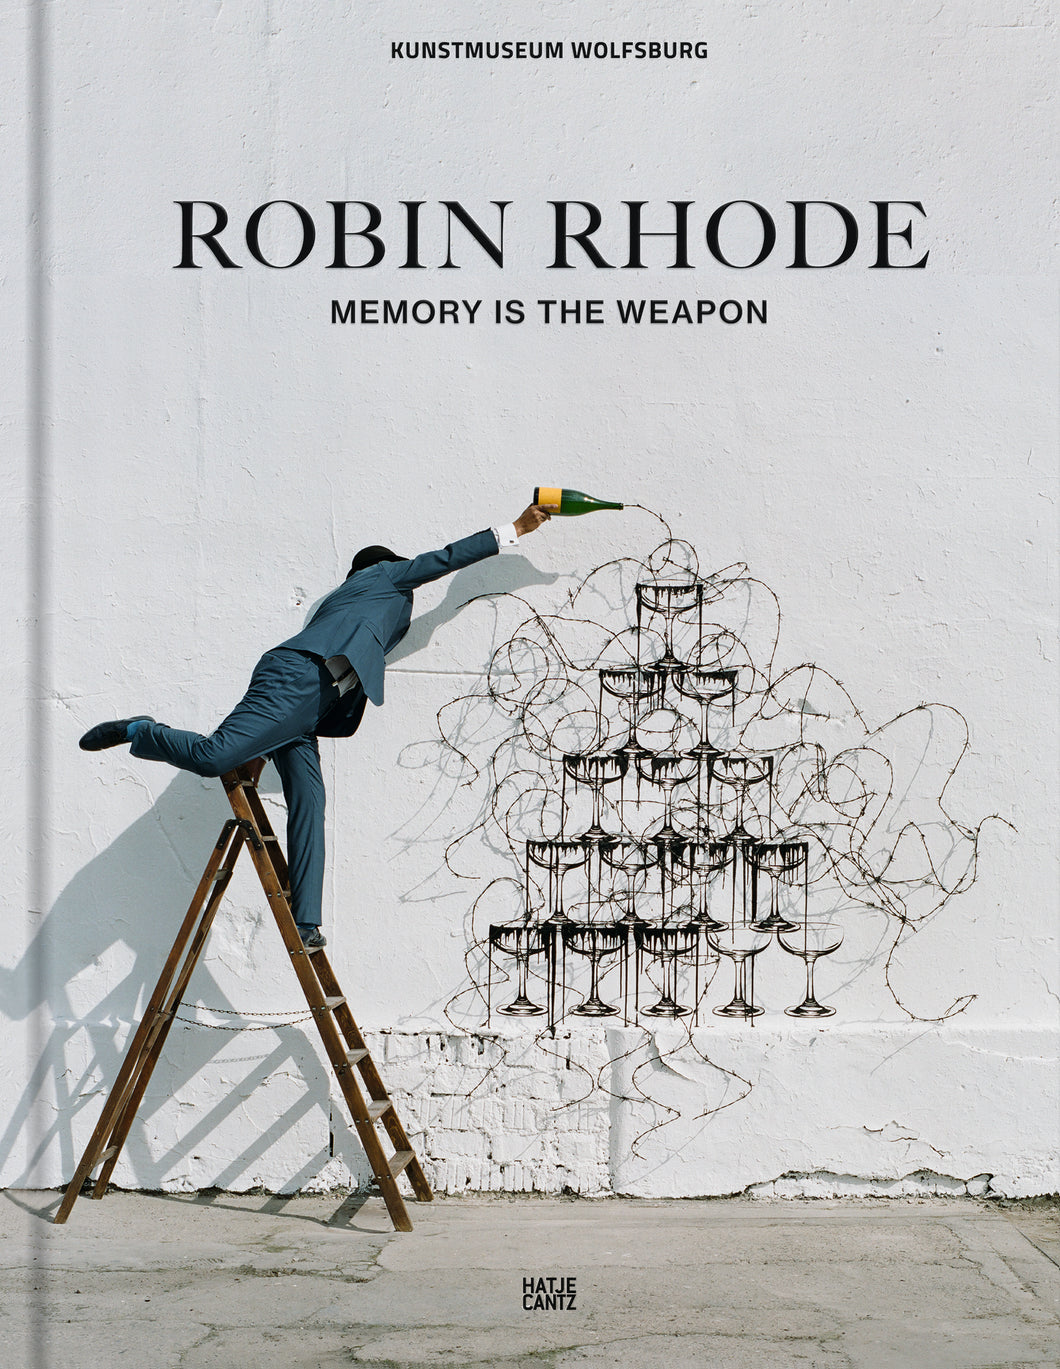 Robin Rhode, 